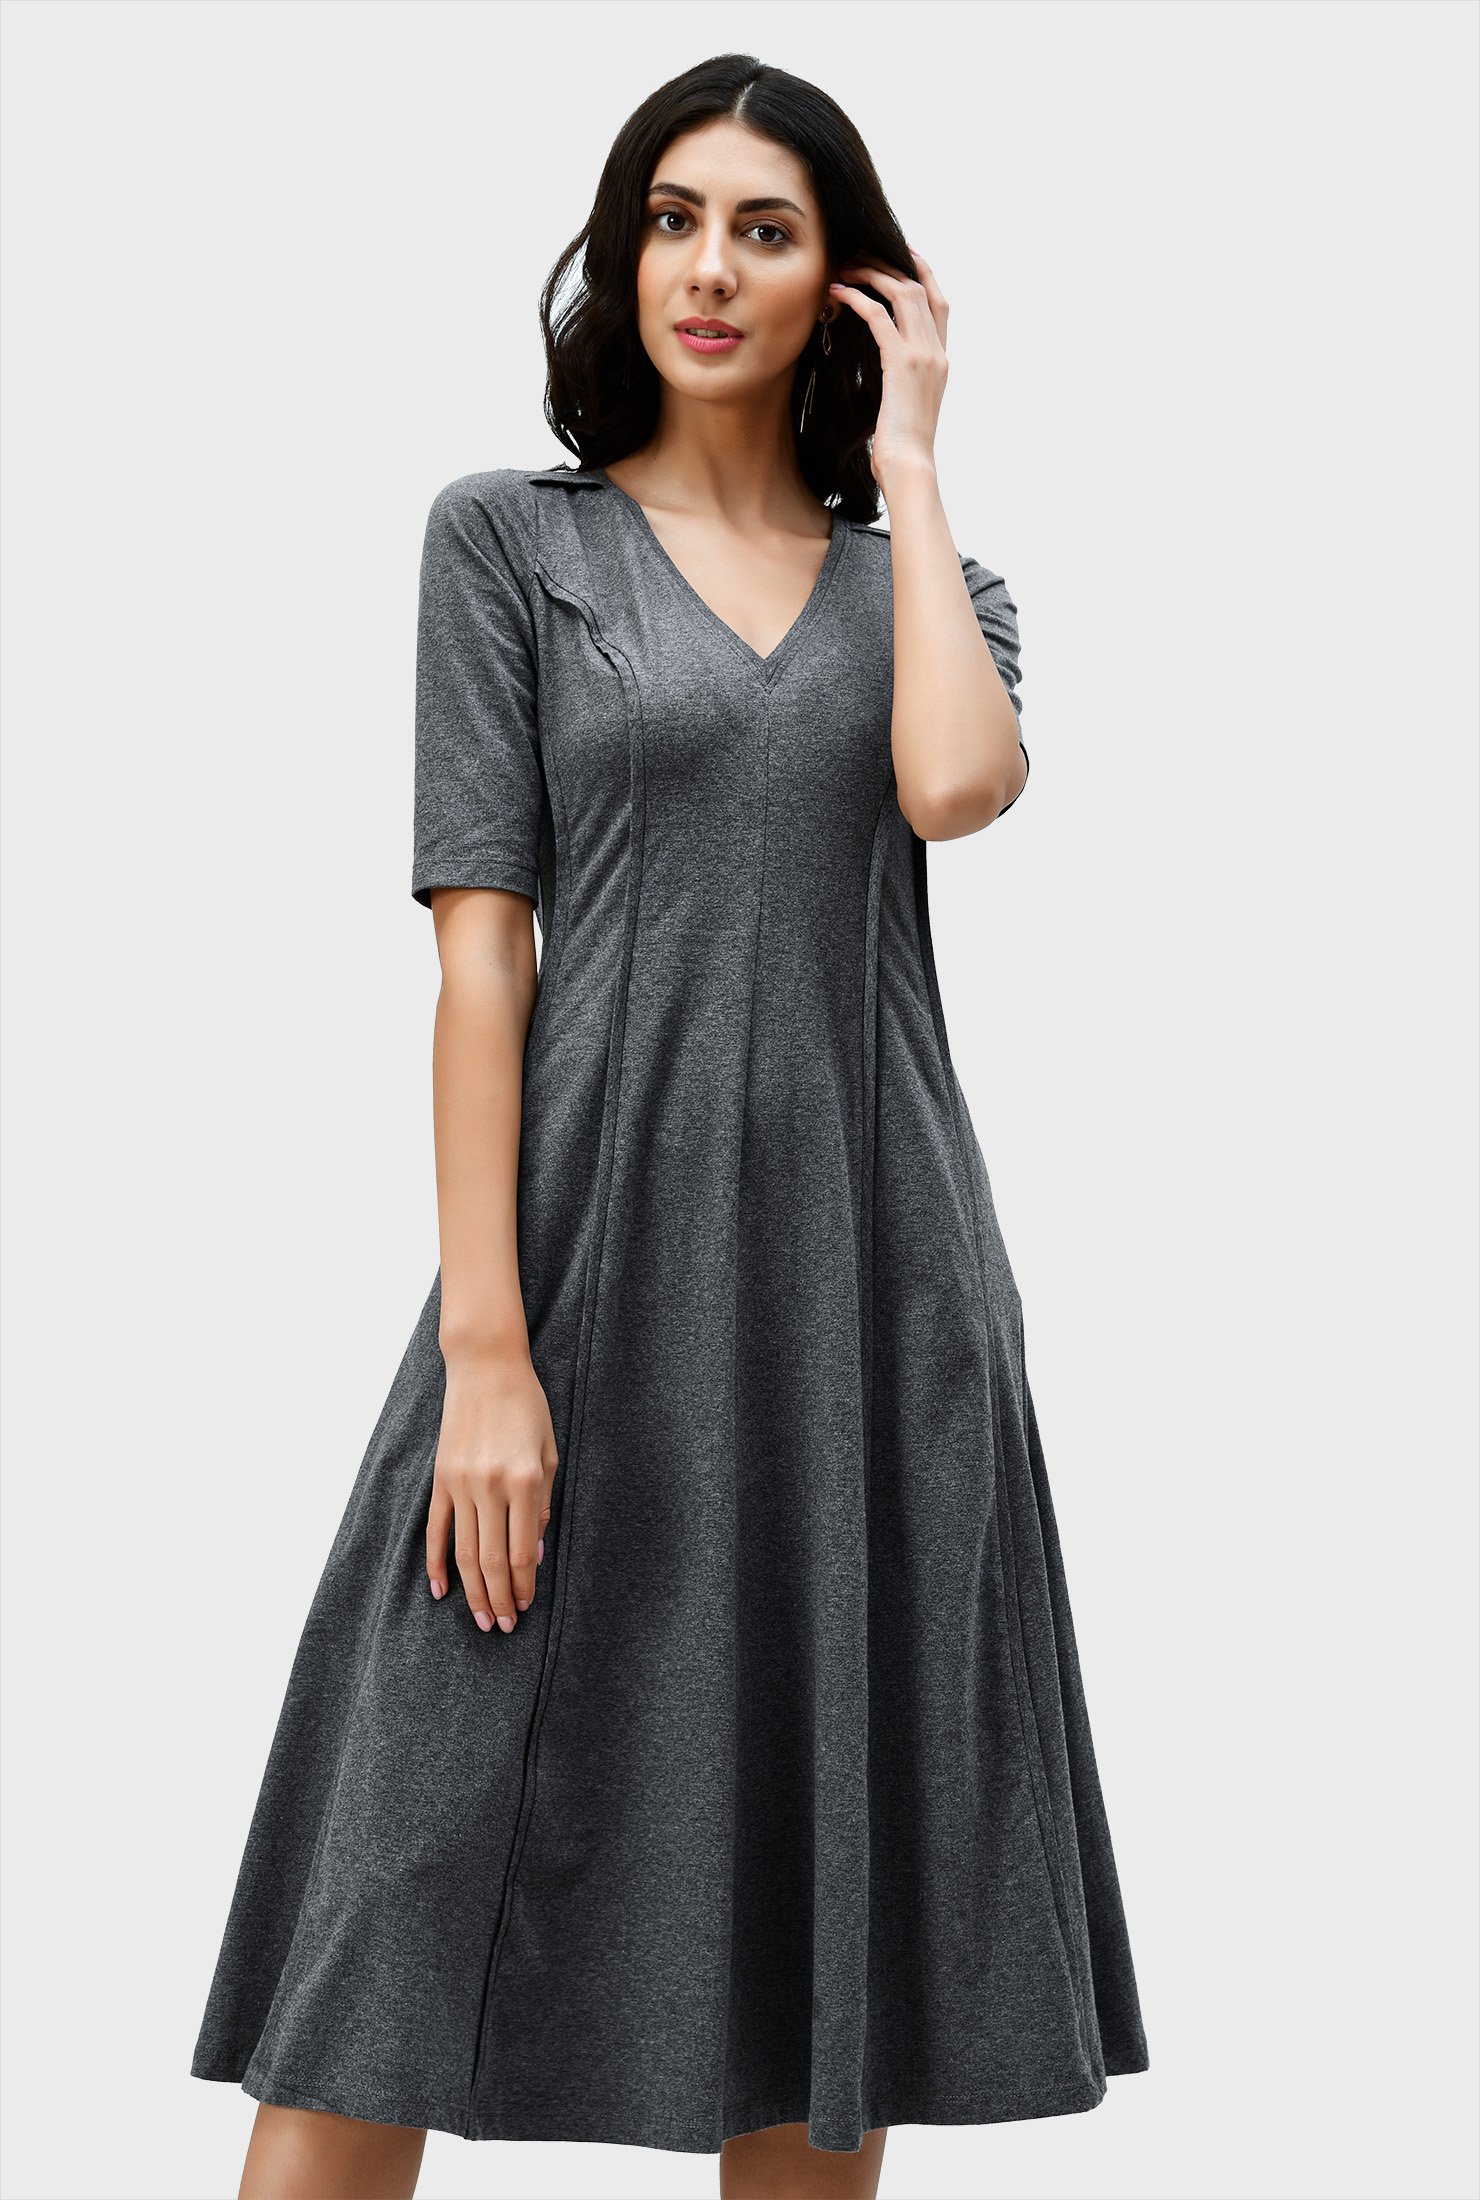 Shop Princess seamed cotton jersey A-line dress | eShakti